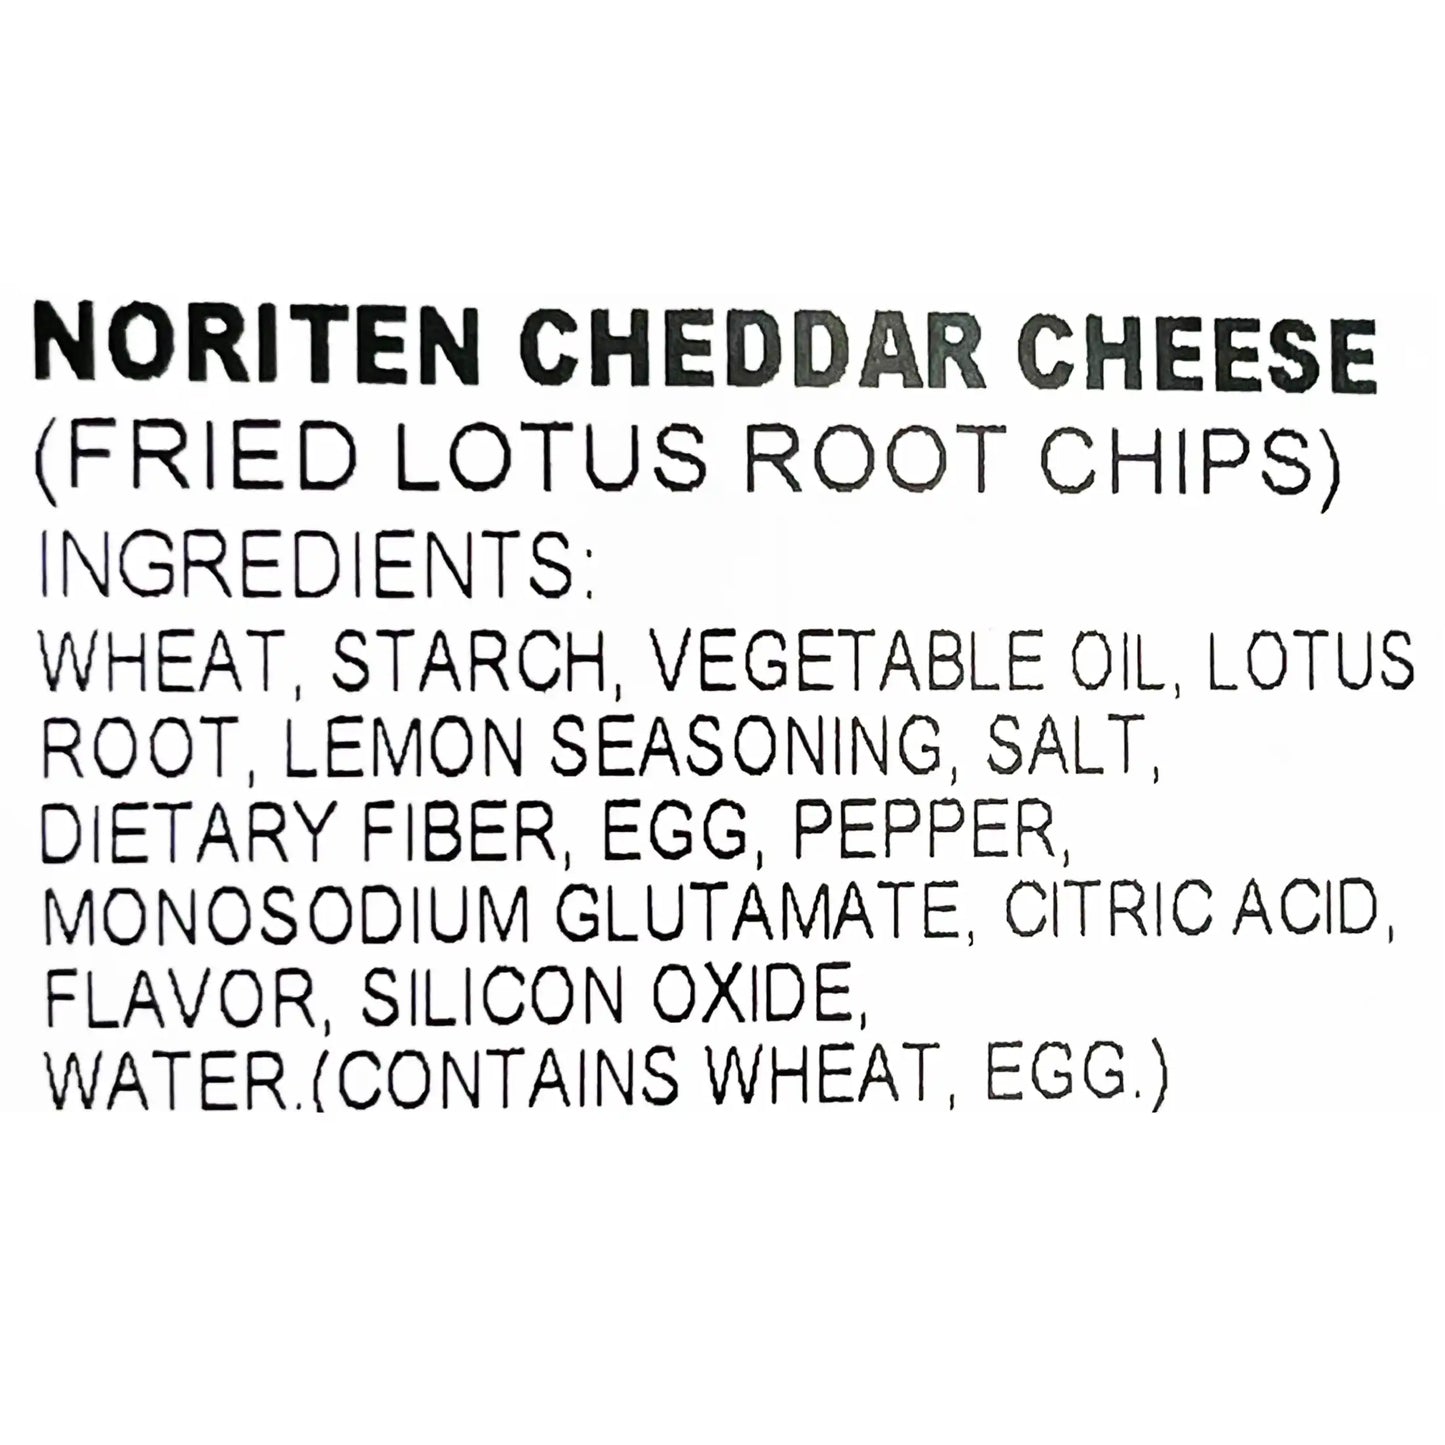 Nori Ten Cheddar Cheese Fried Lotus Root Chips 2.46 oz